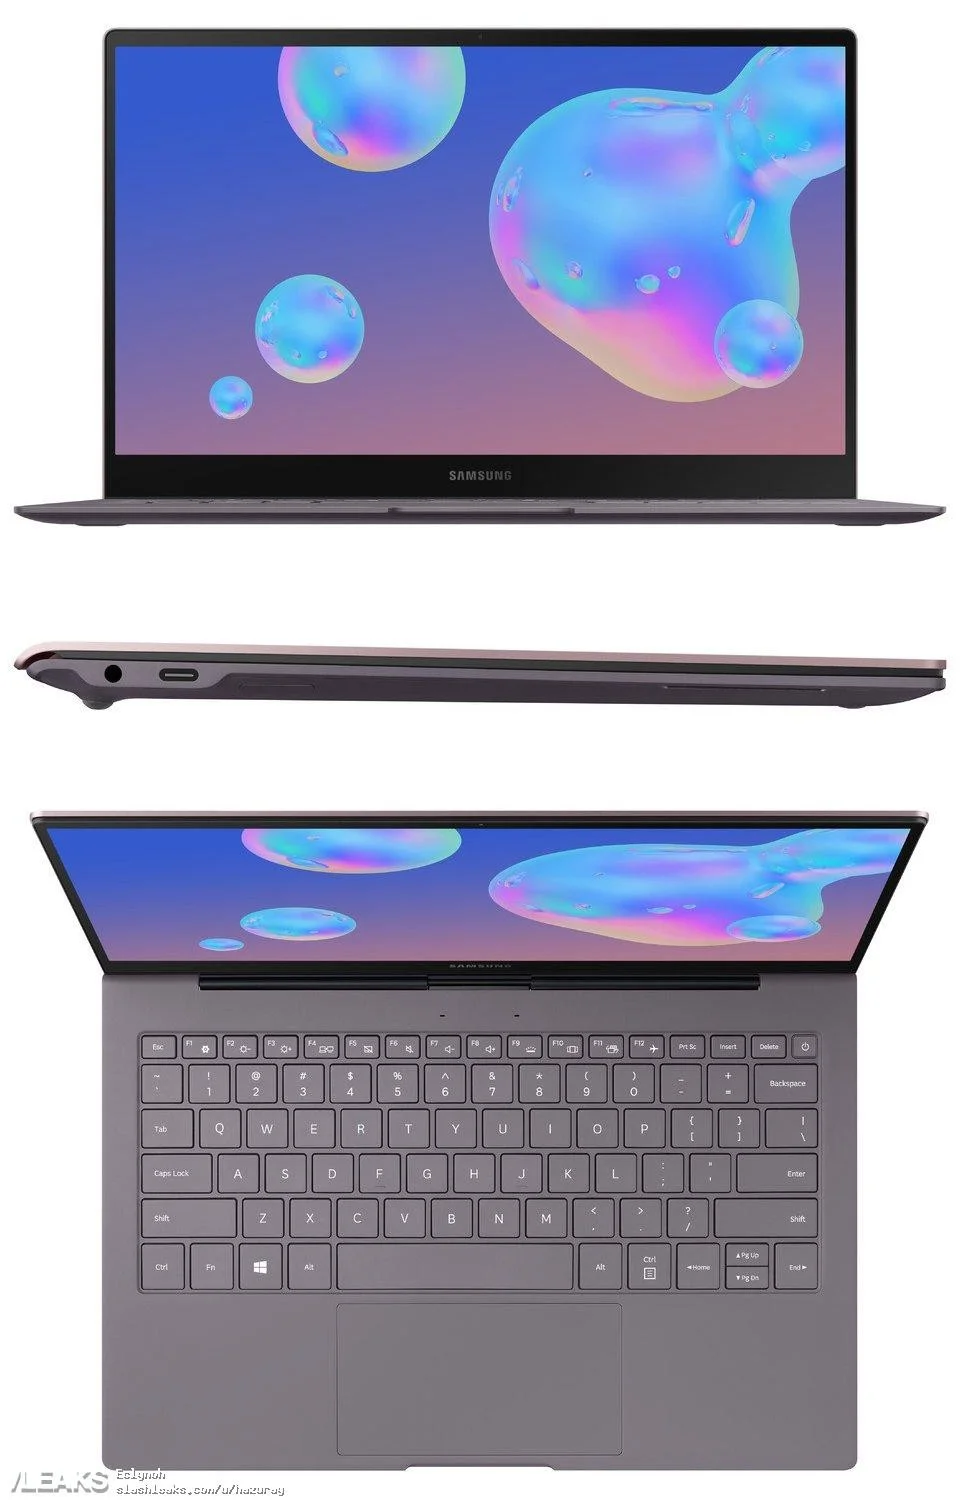 Утечка показала внешний вид ноутбука Samsung на Snapdragon 855 - фото 1